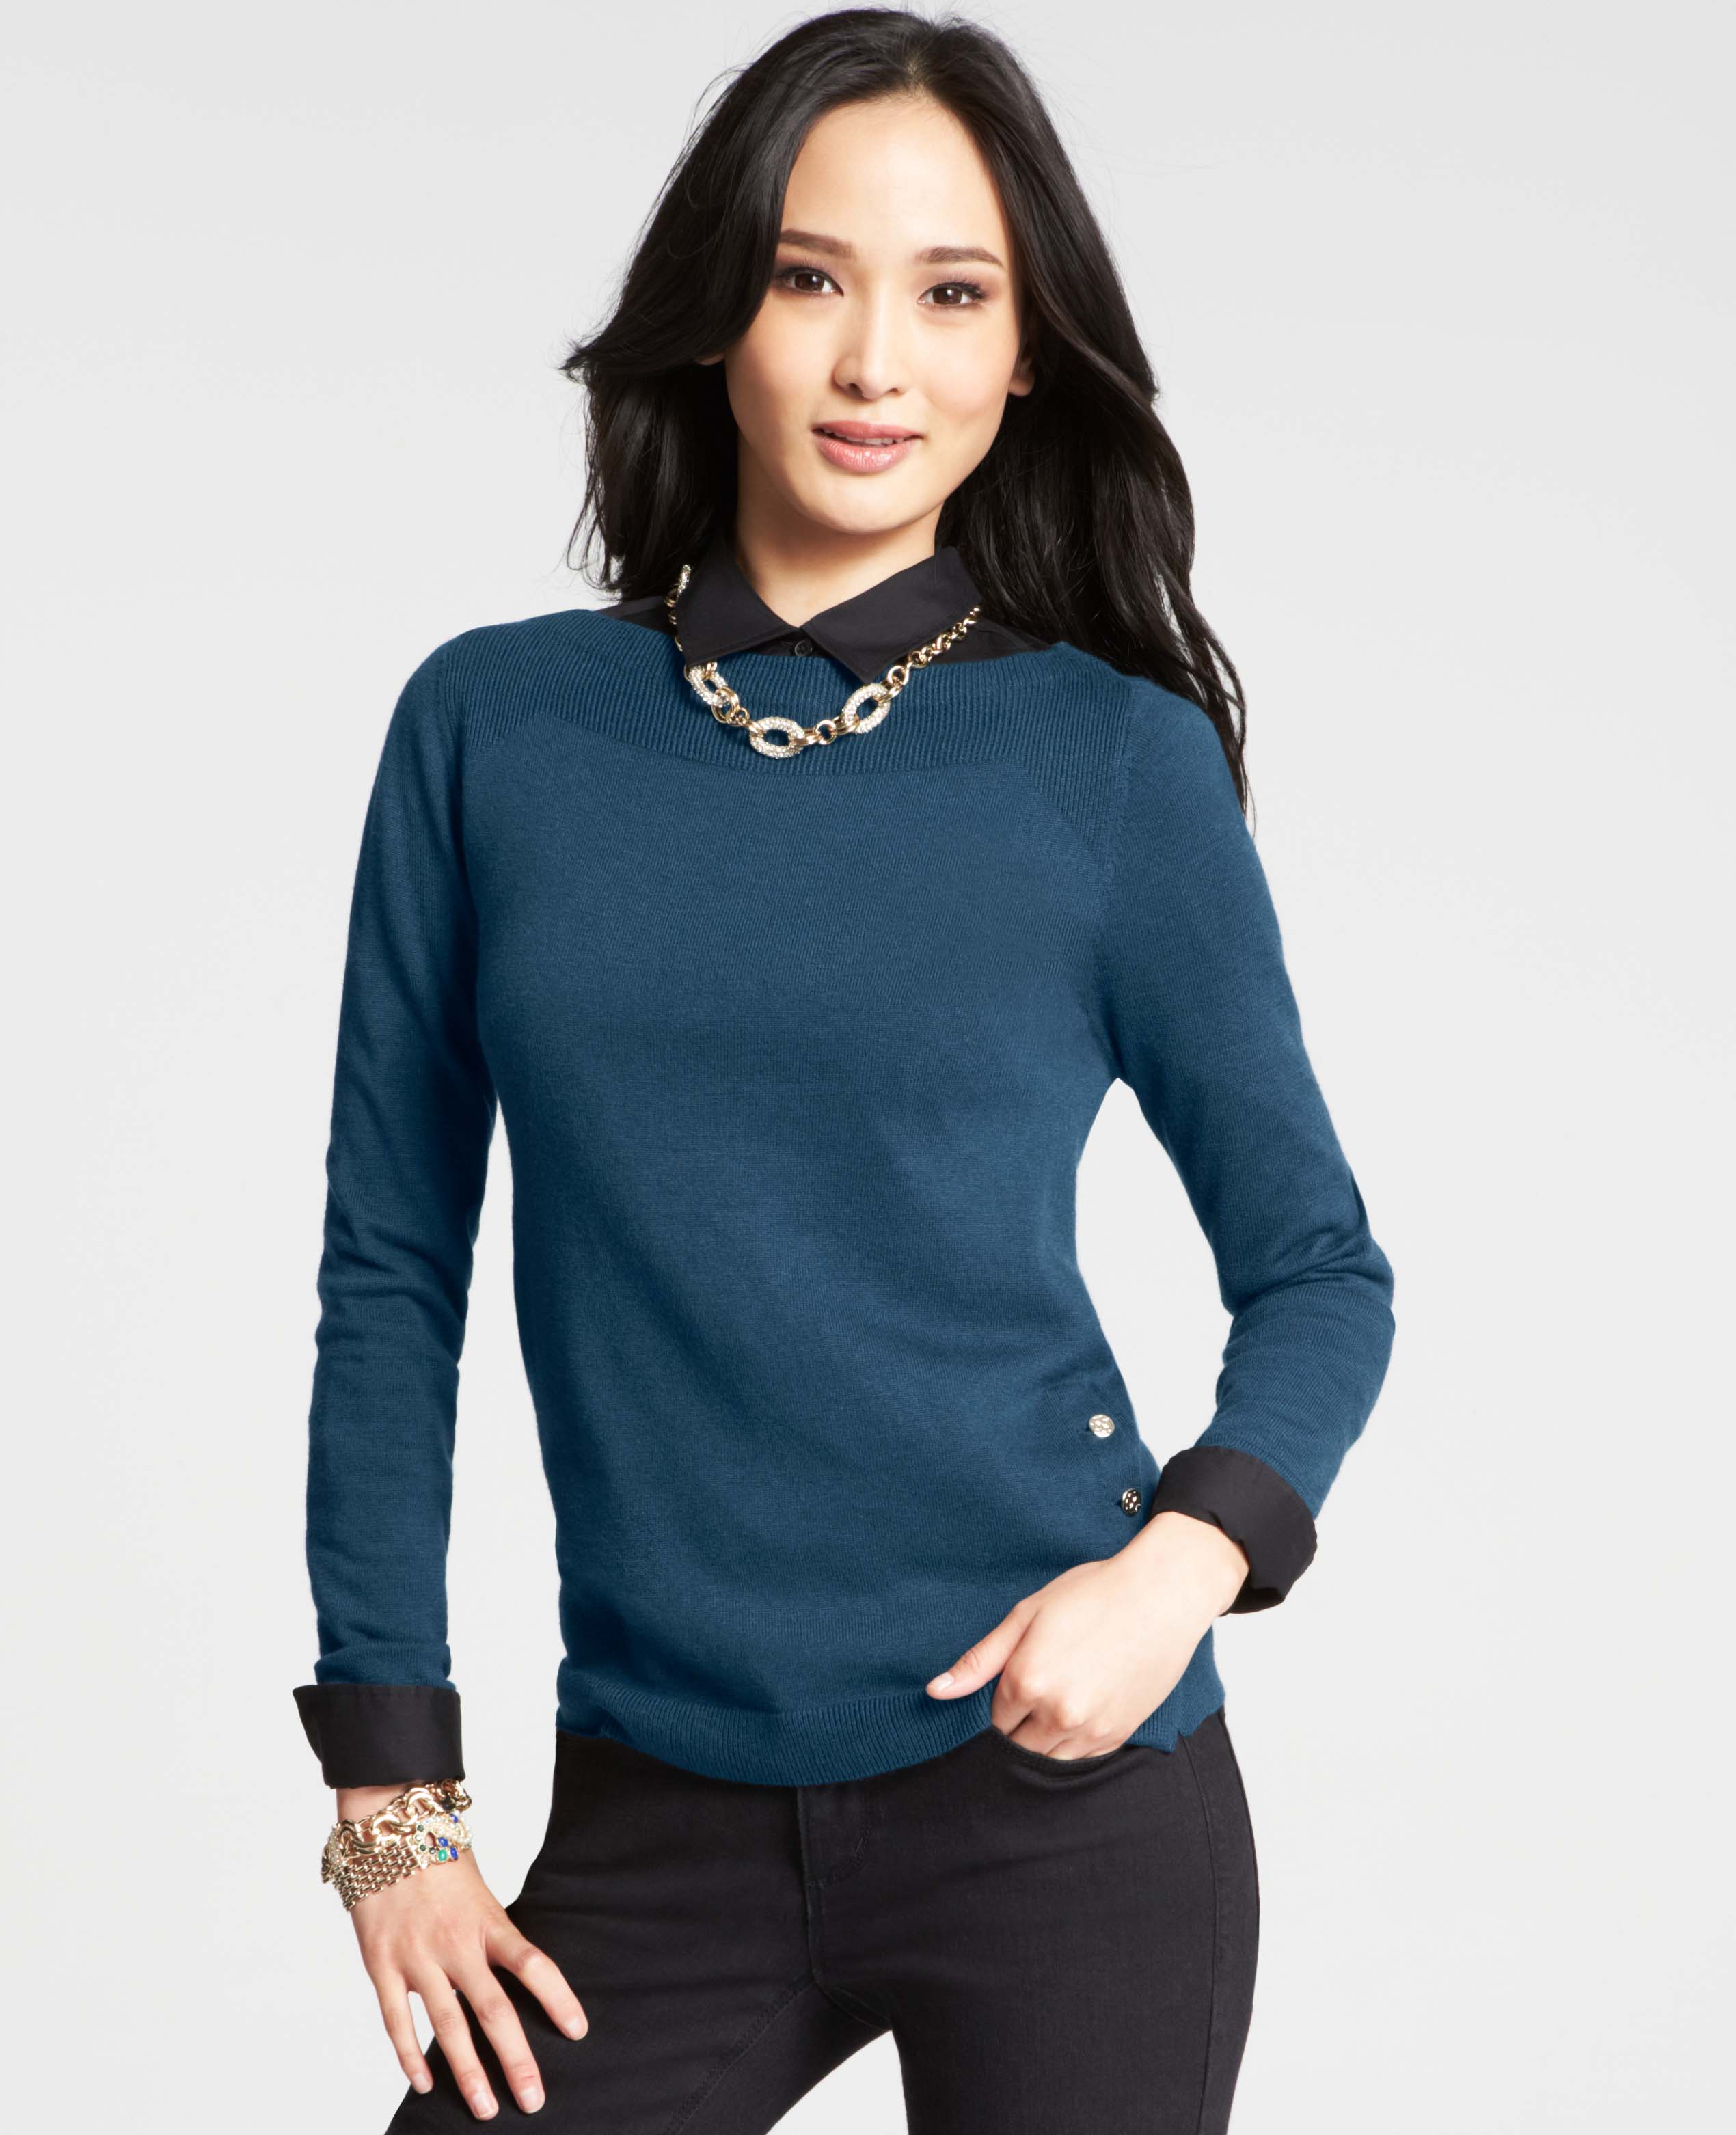 Lyst - Ann Taylor Side Button Boatneck Sweater in Blue